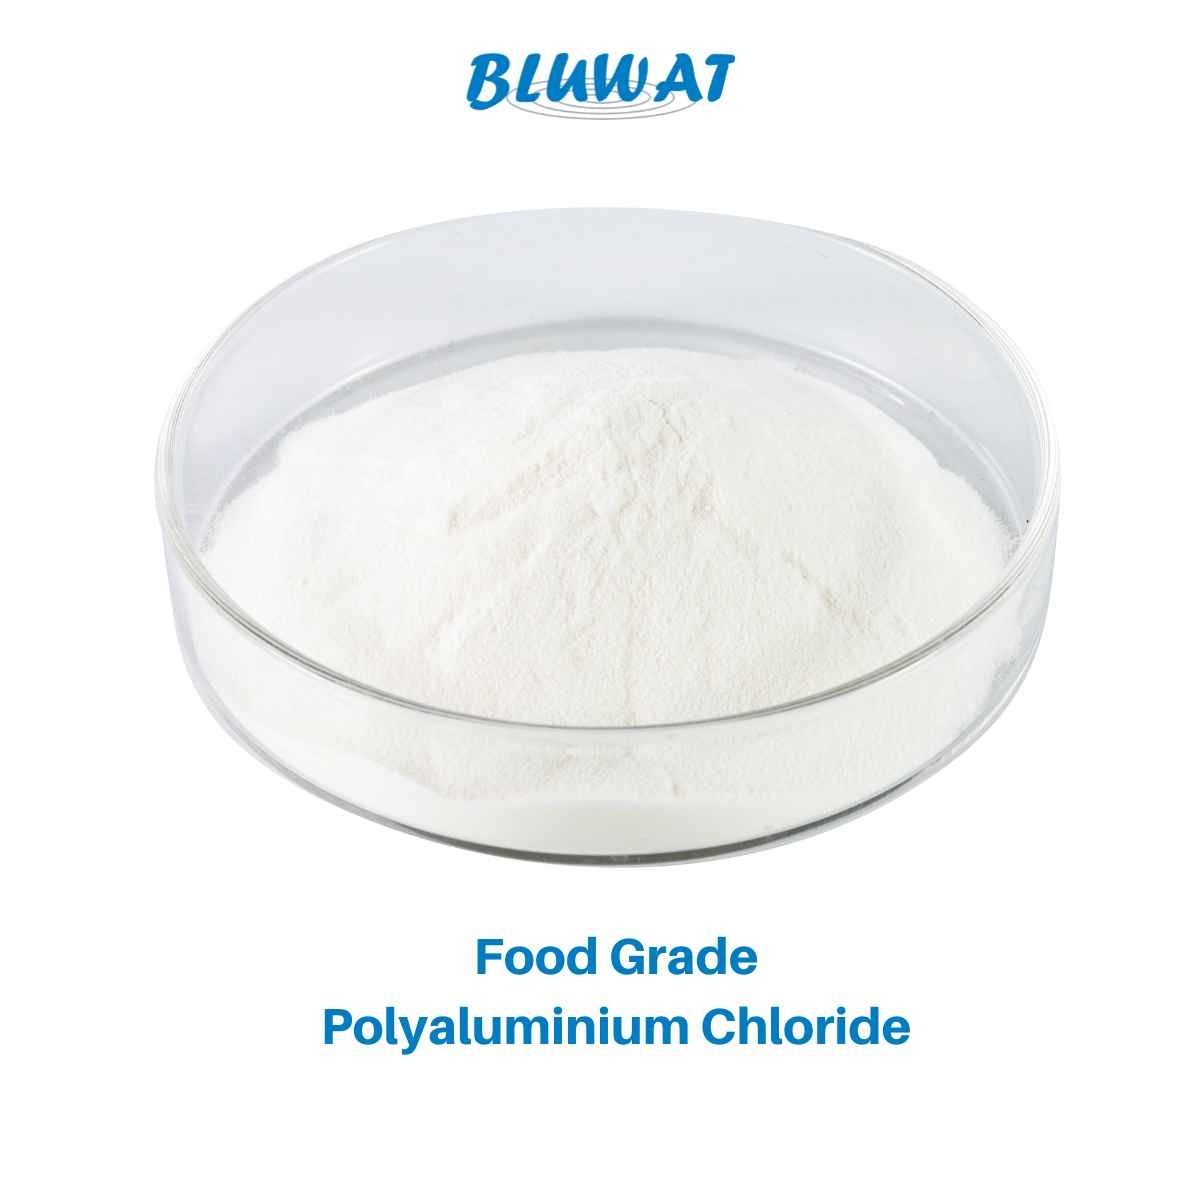 Wholesale Food Grade PolyAluminium Chloride White Powder Drinking Water Purification from china suppliers